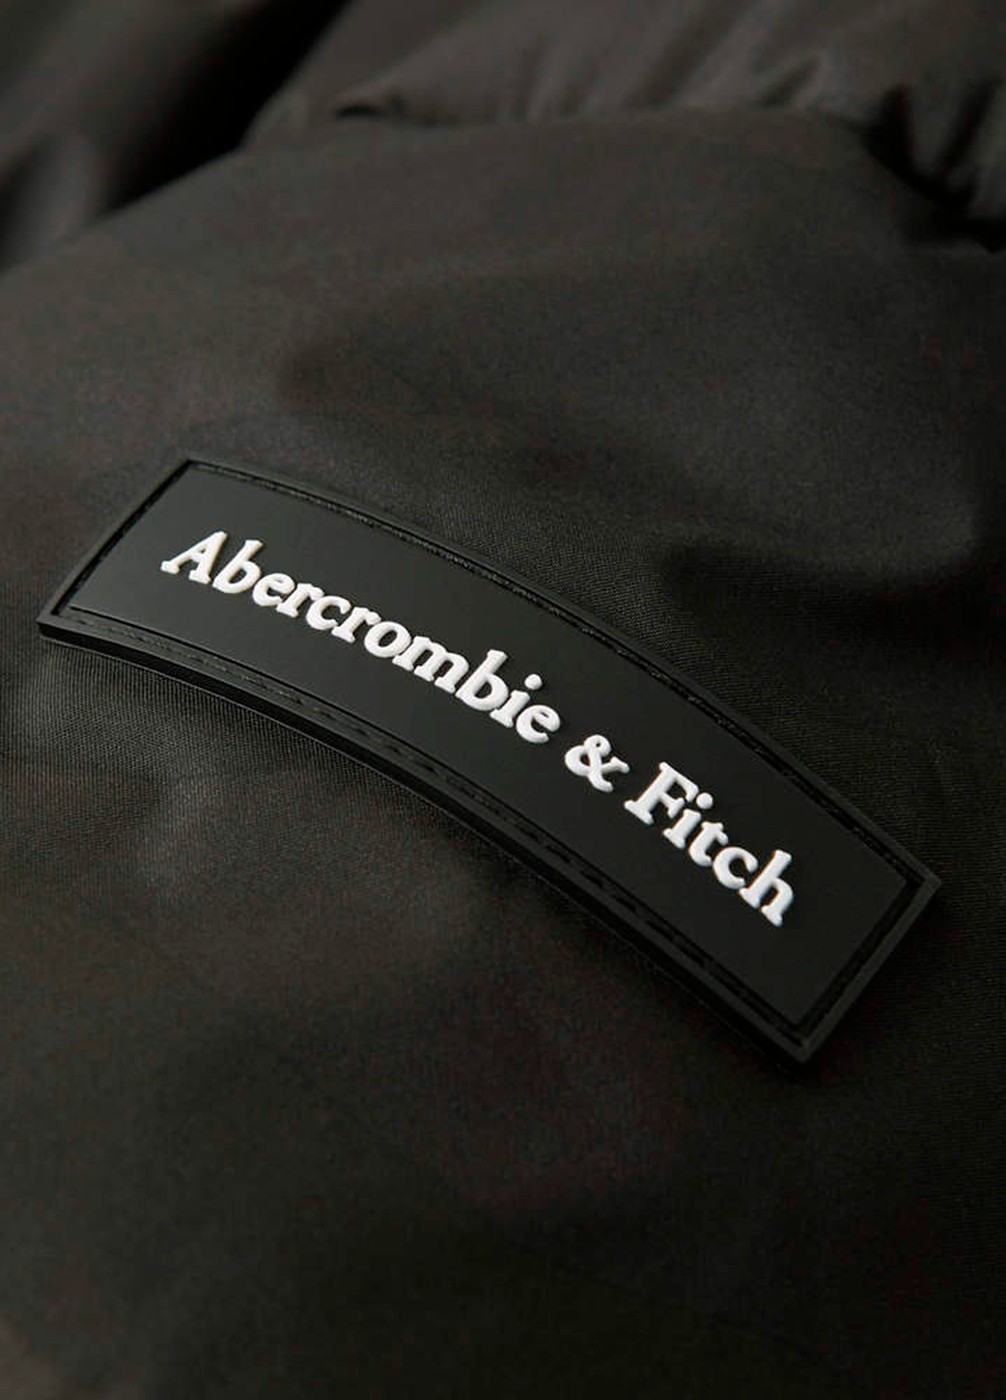 Куртка Abercrombie & Fitch, L, L